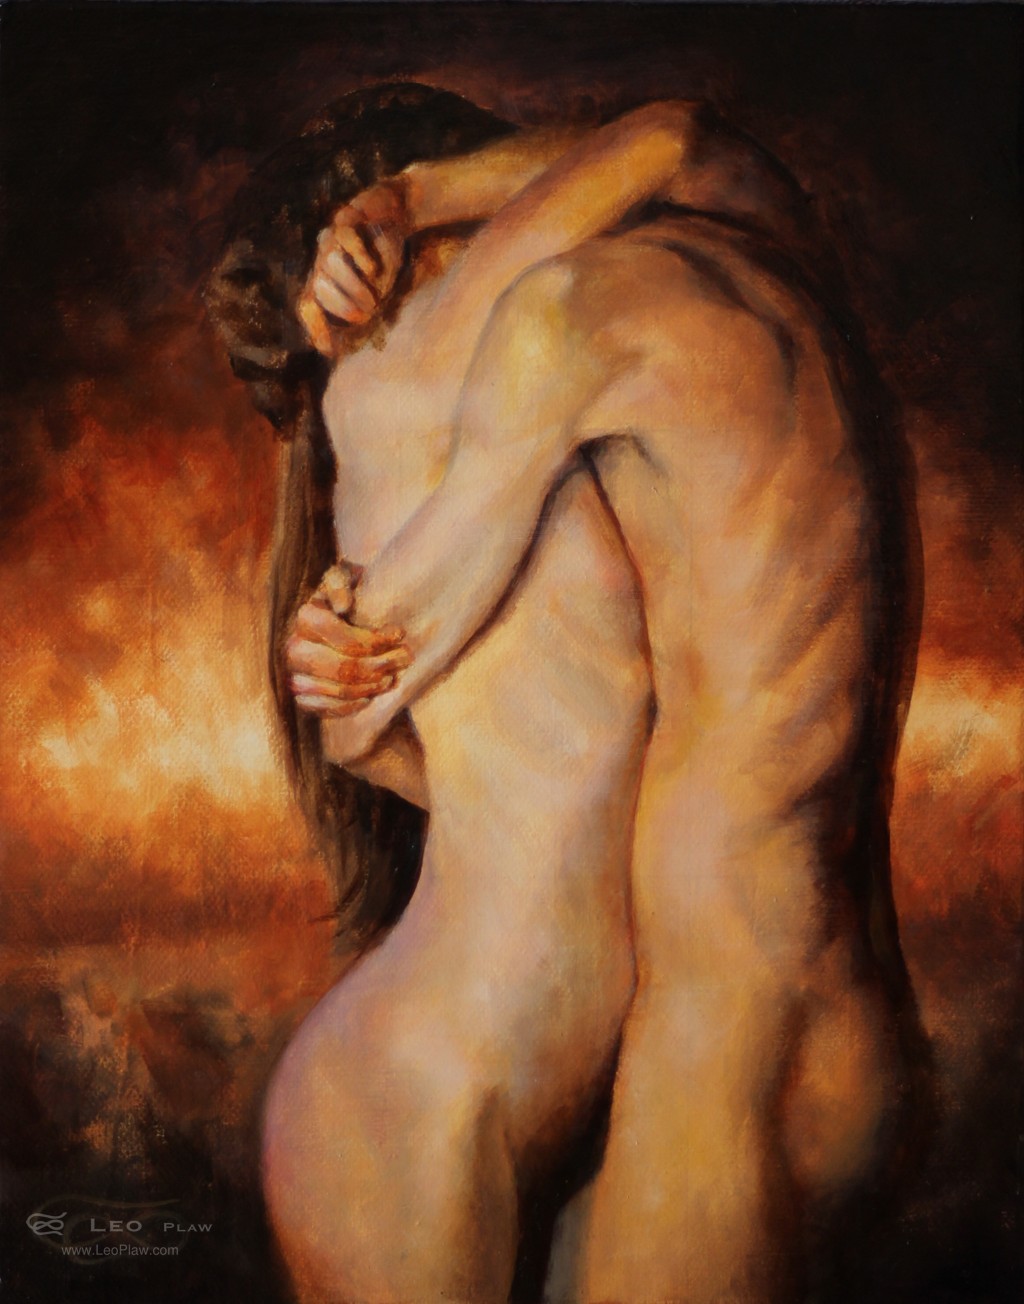 "Enfold", Leo Plaw, 24 x 30cm, oil on canvas